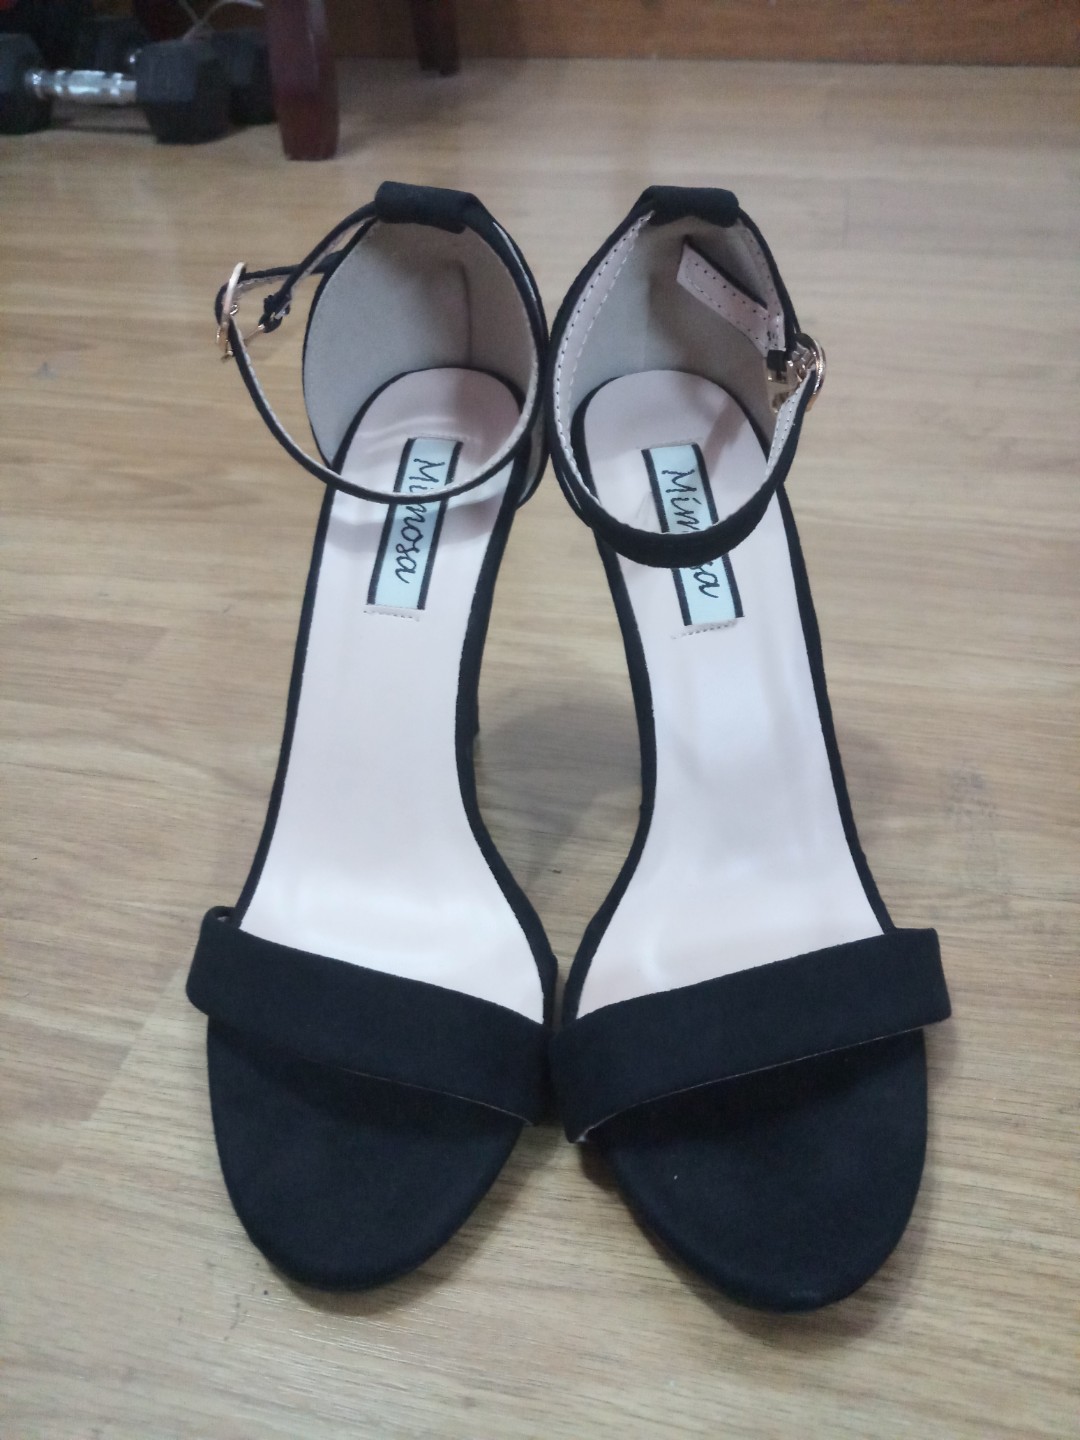 classy black high heels